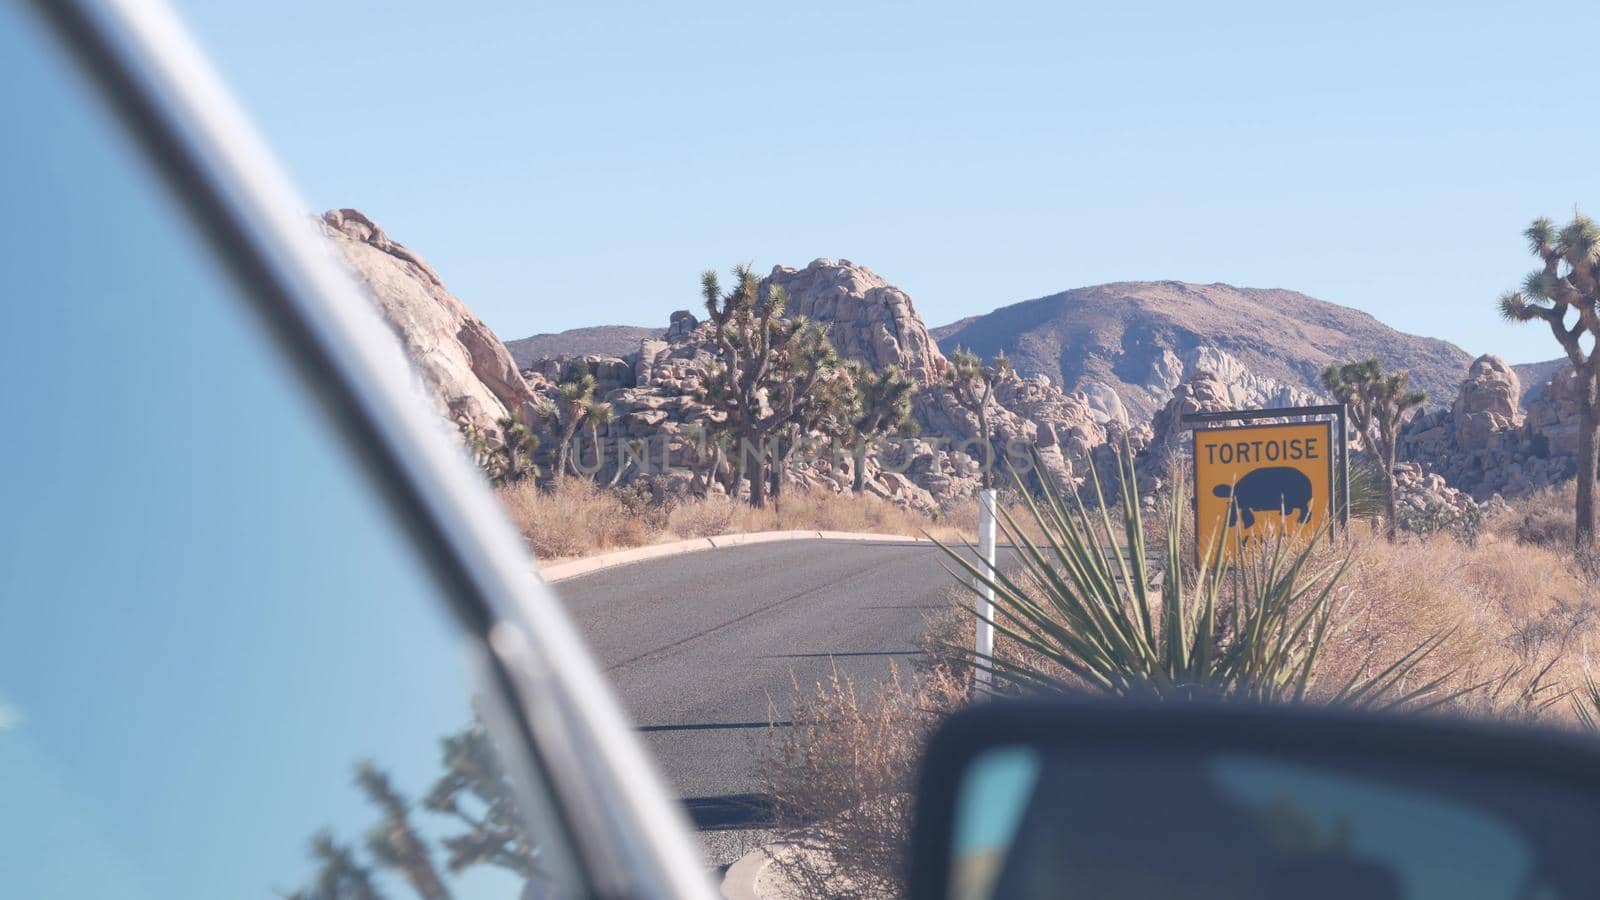 Tortoise or turtle crossing yellow road sign, California USA. Wild animal xing. by DogoraSun